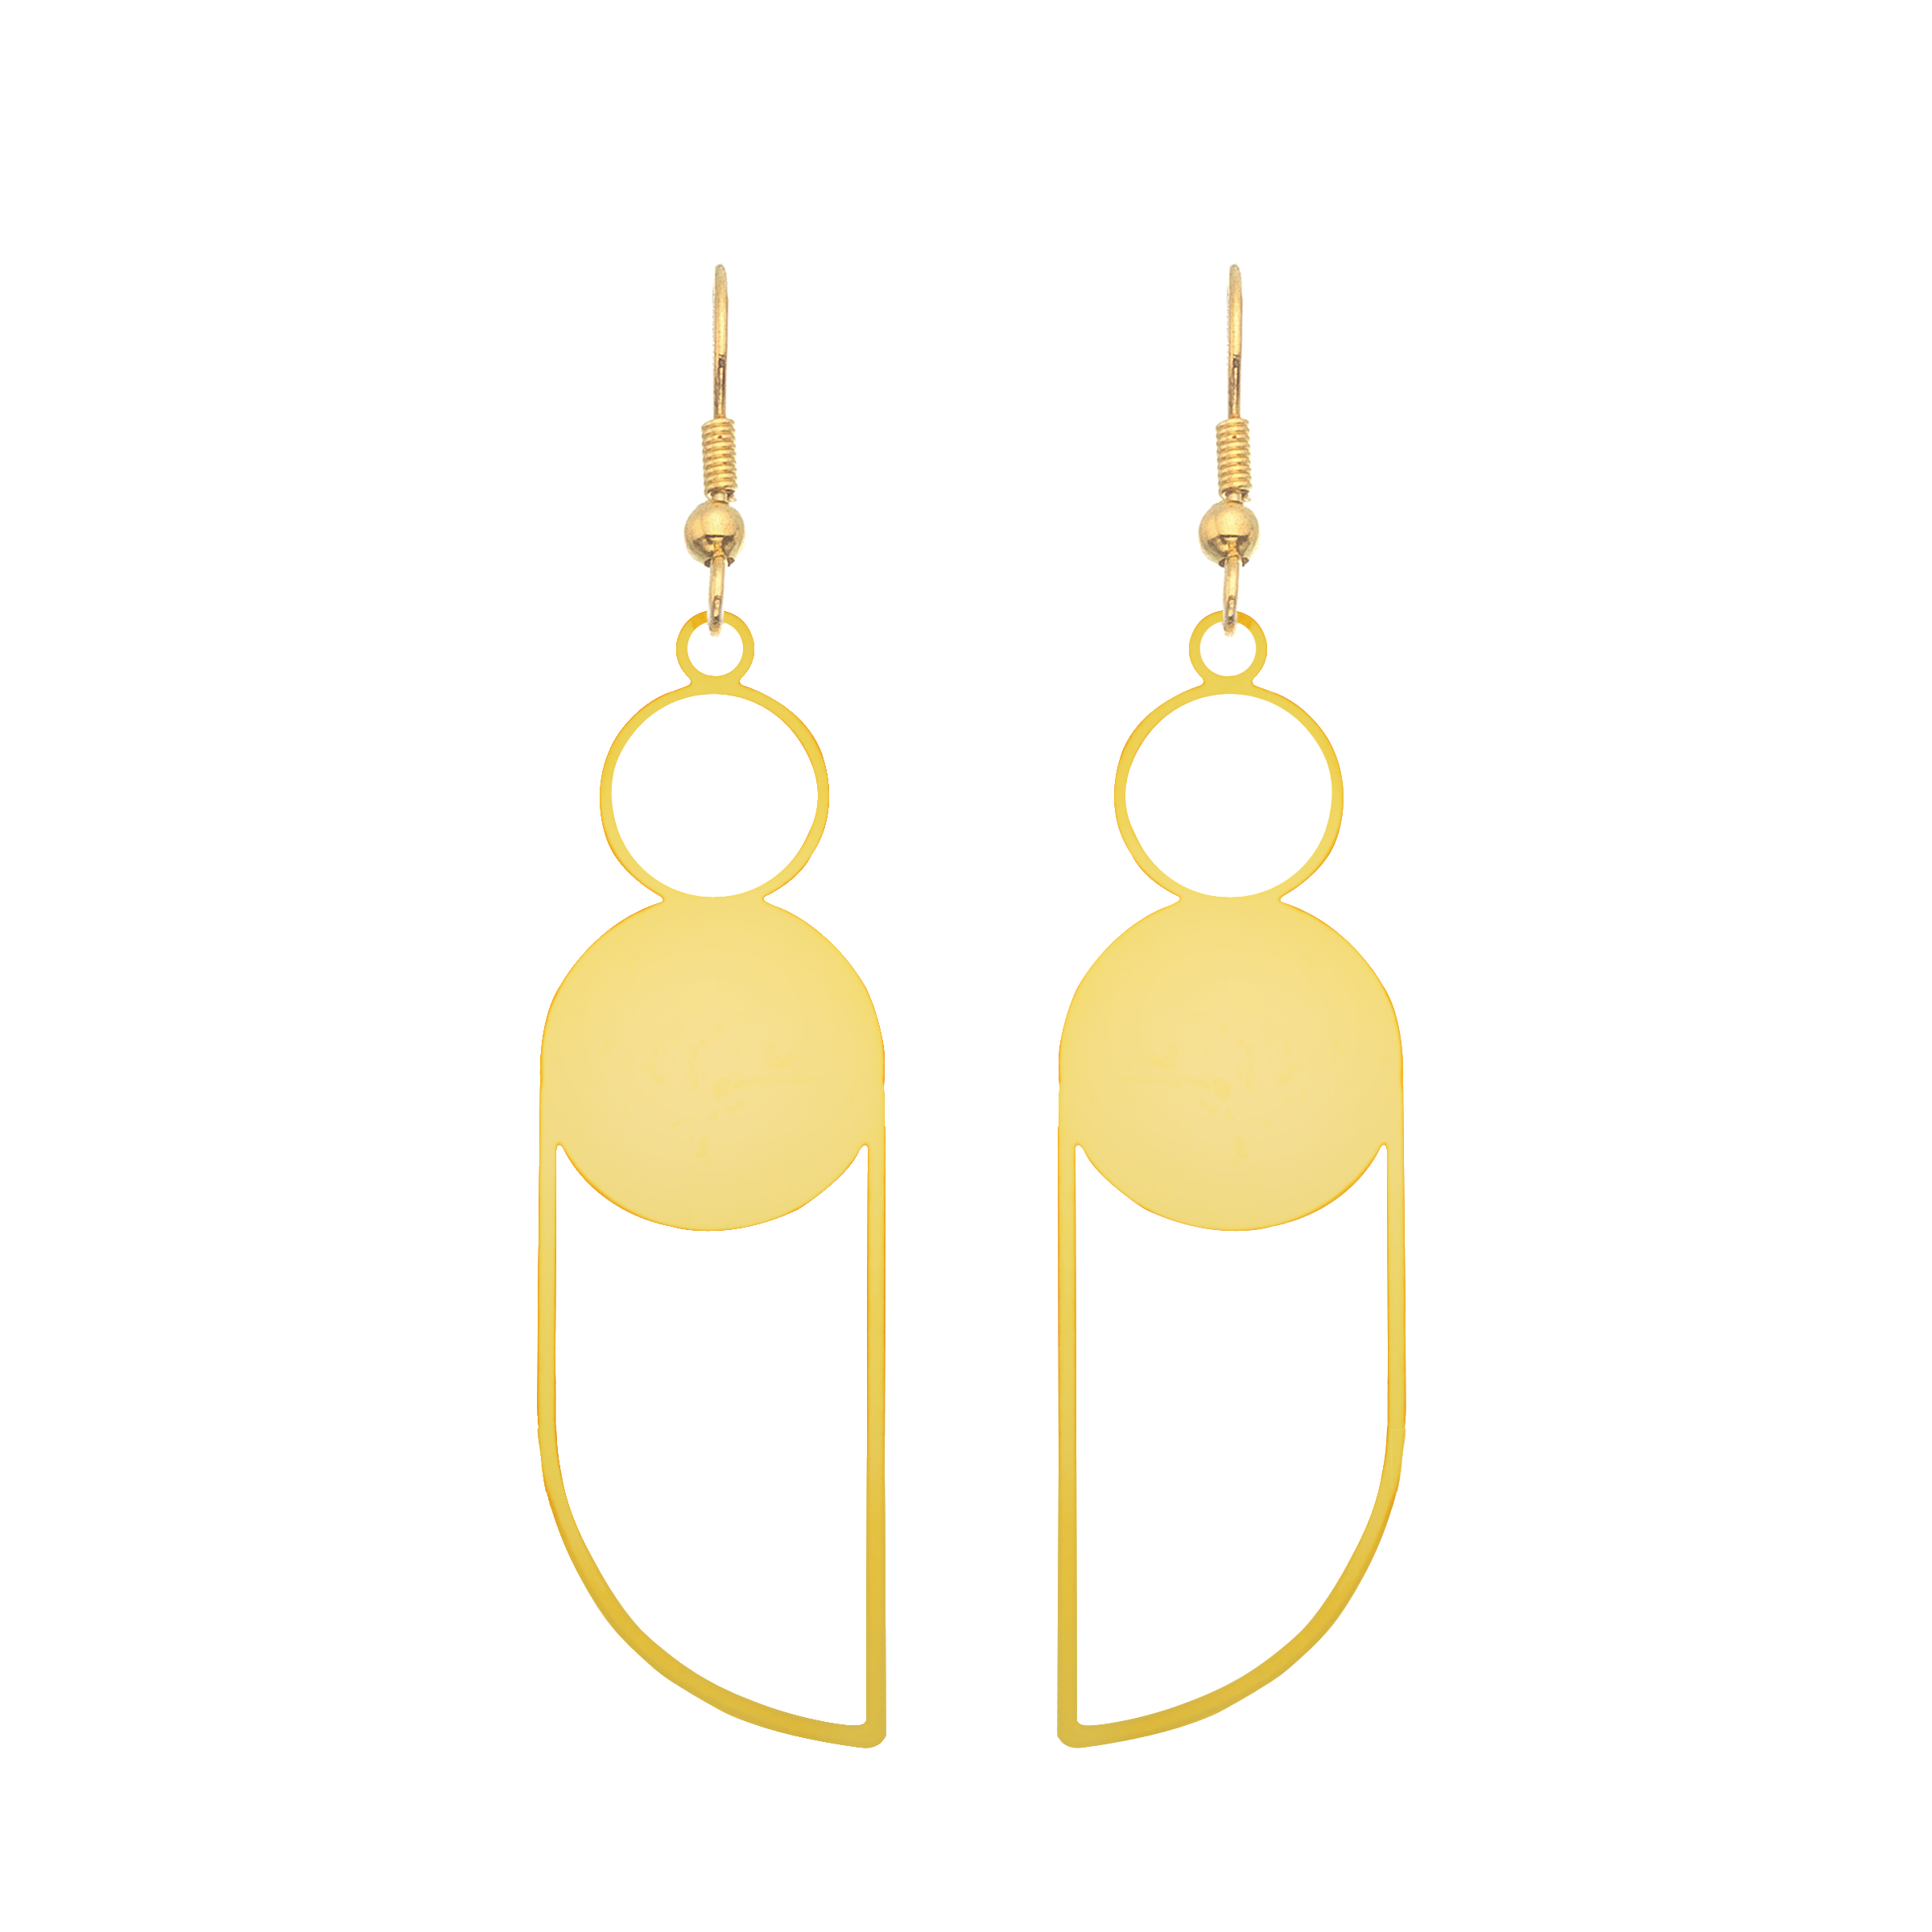 Bauhaus Earrings